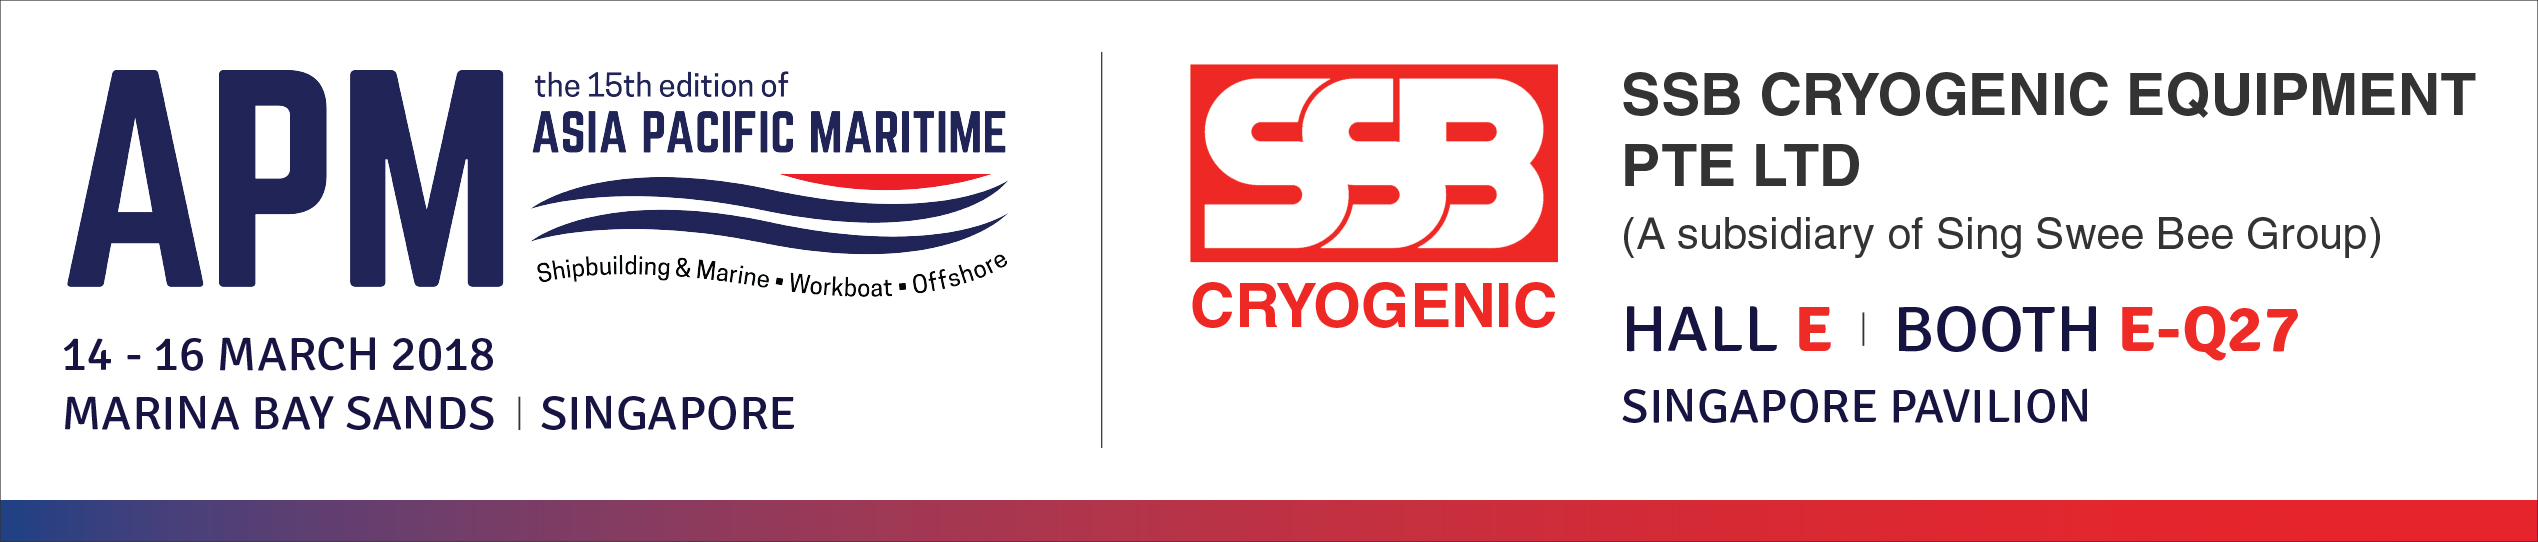 SSB Cryogenic Equipment in APM 2018